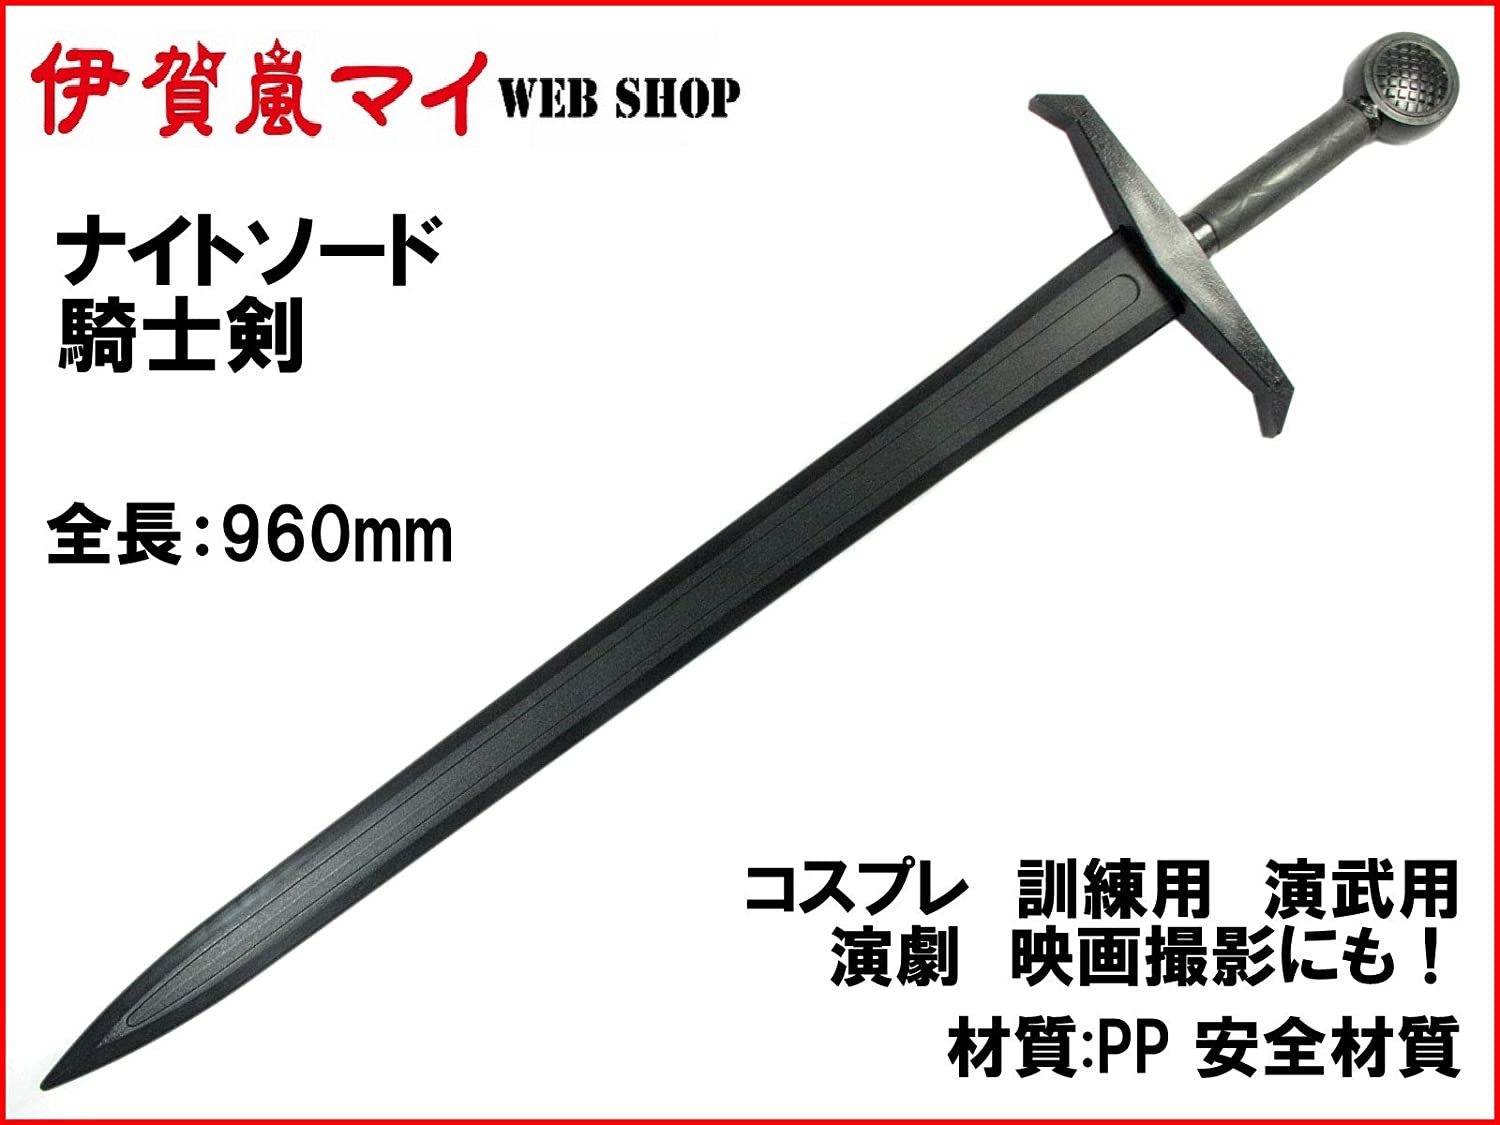 W227im ナイトソード 騎士の剣 伊賀嵐マイの武器ショップ